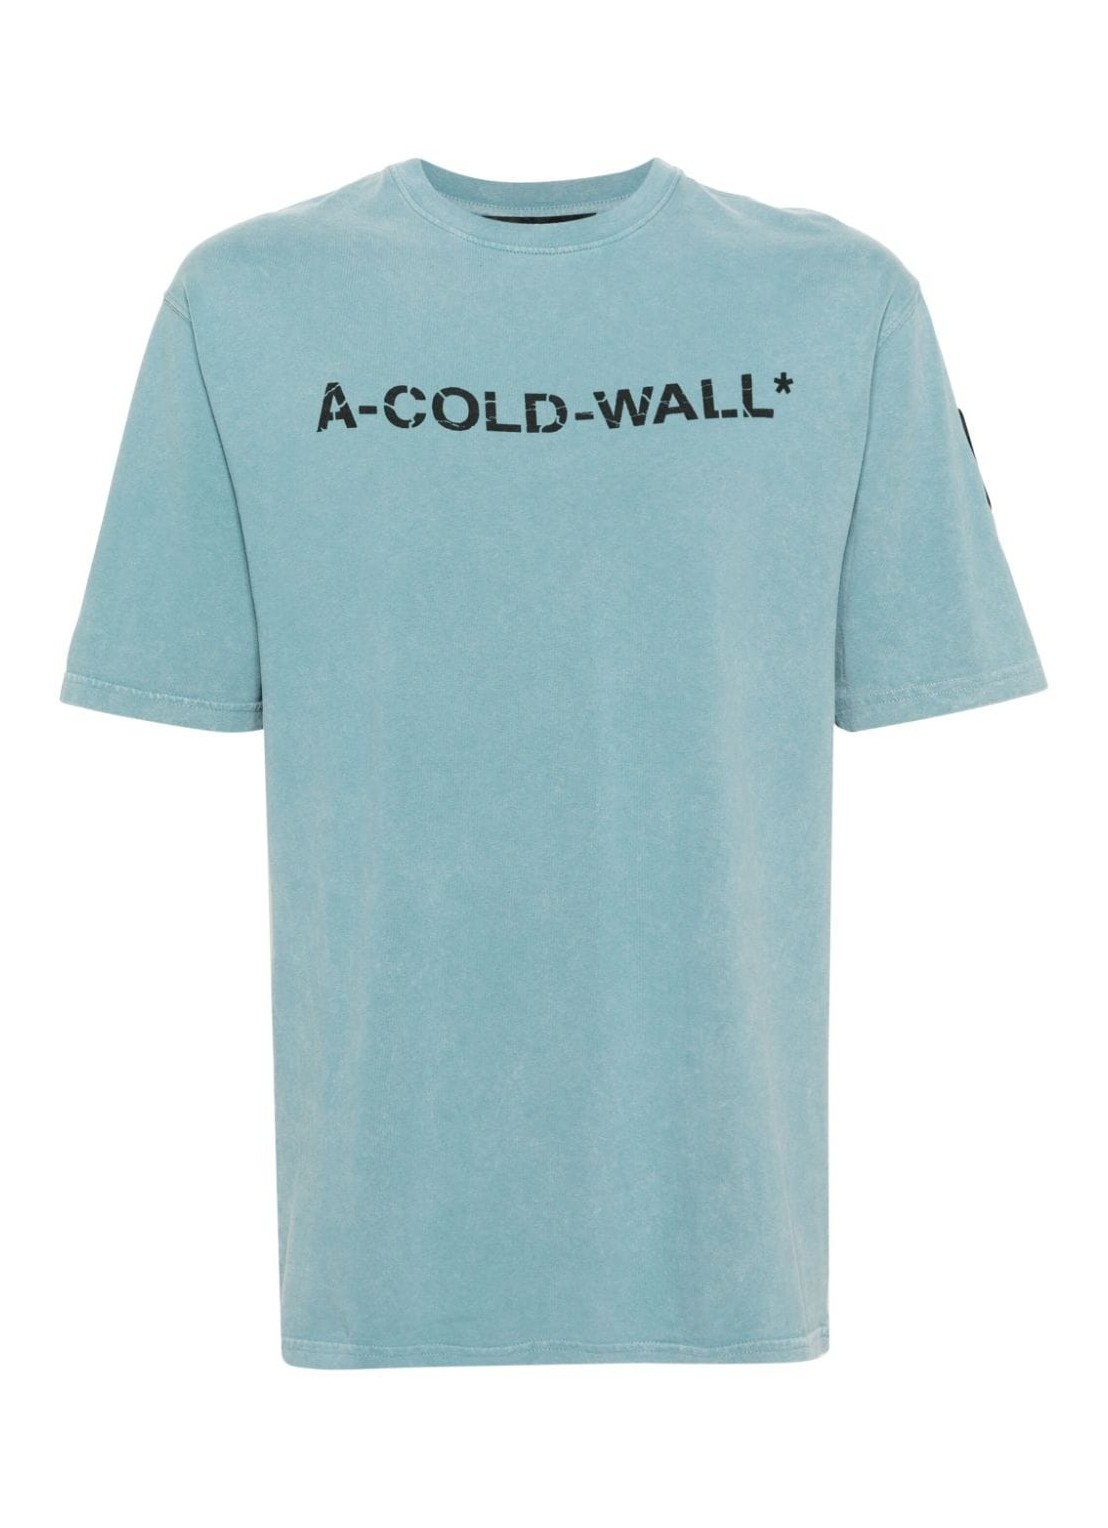 Camiseta a-cold-wall* t-shirt man overdye logo t-shirt acwmts186 faded teal fdtl talla Azul
 